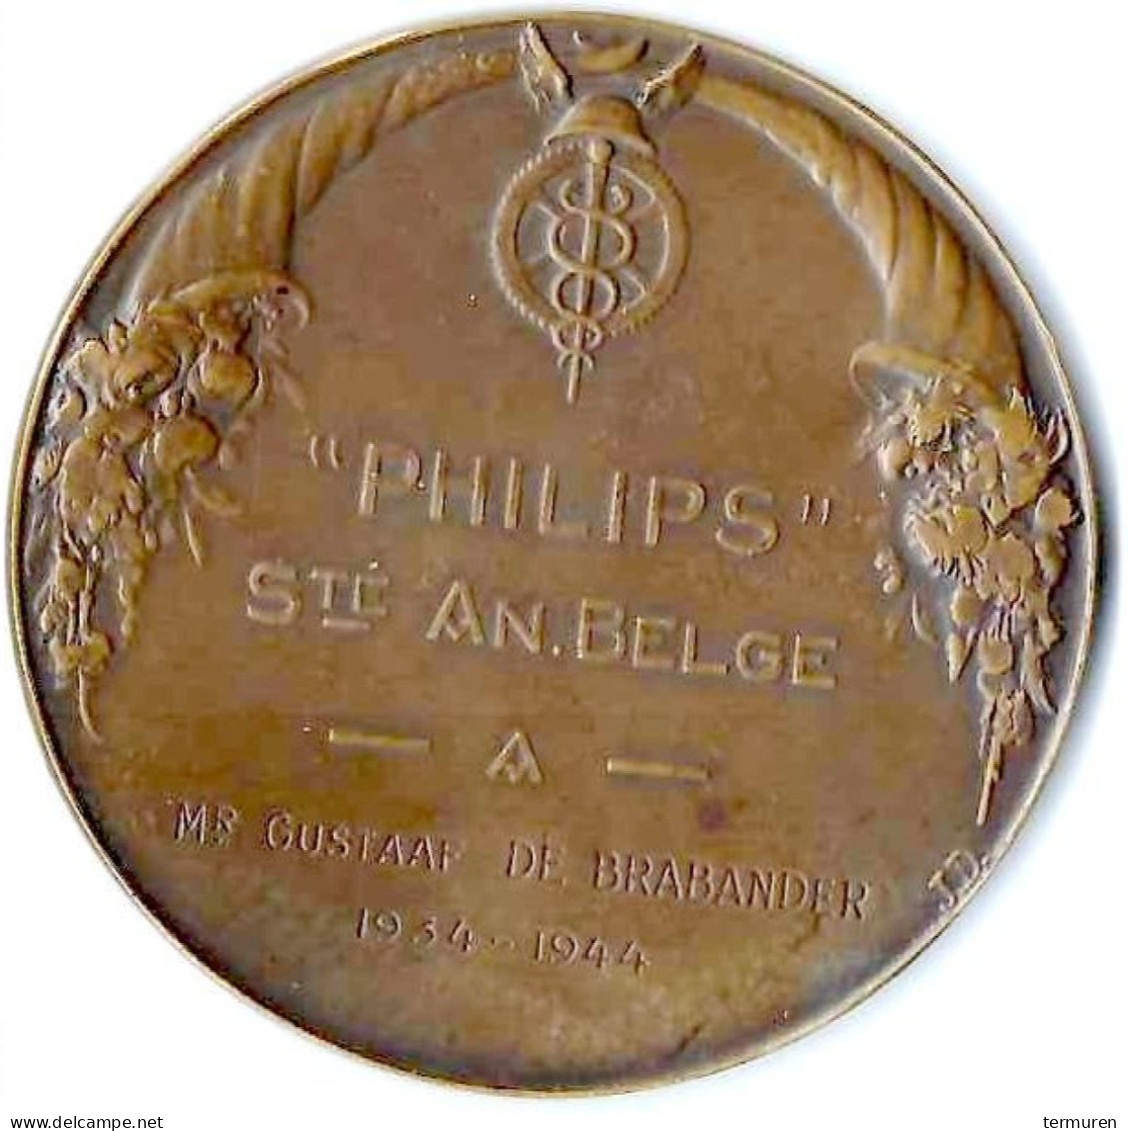 Philips : Ste An Belge -1934 -1944 Aan G De Branbander -Medaille Getekend Josüe Dupon - Professionali / Di Società